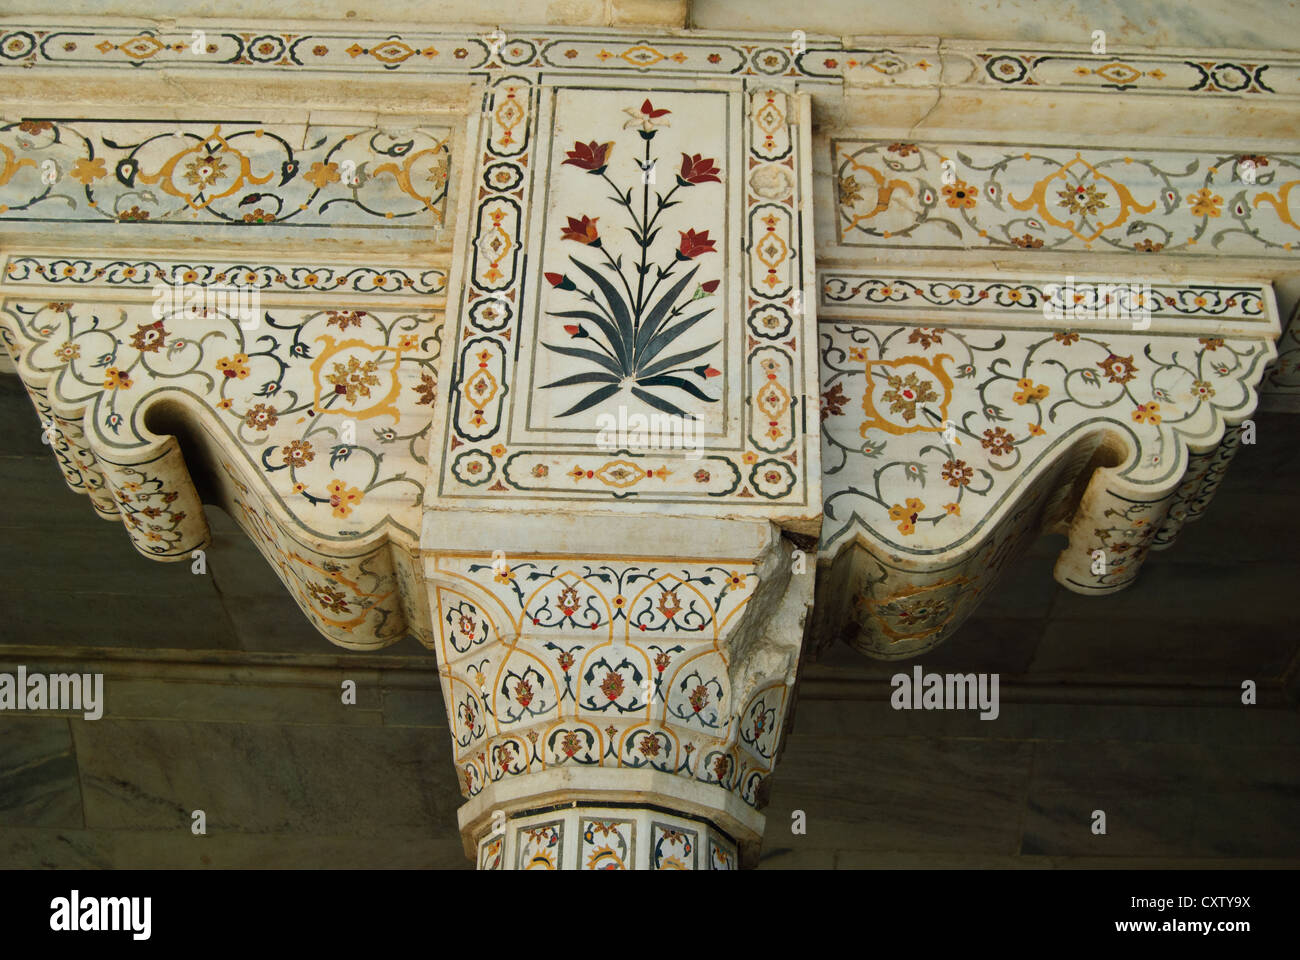 Marble inlay work on the column of Musamman Burj, Agra Fort Stock Photo